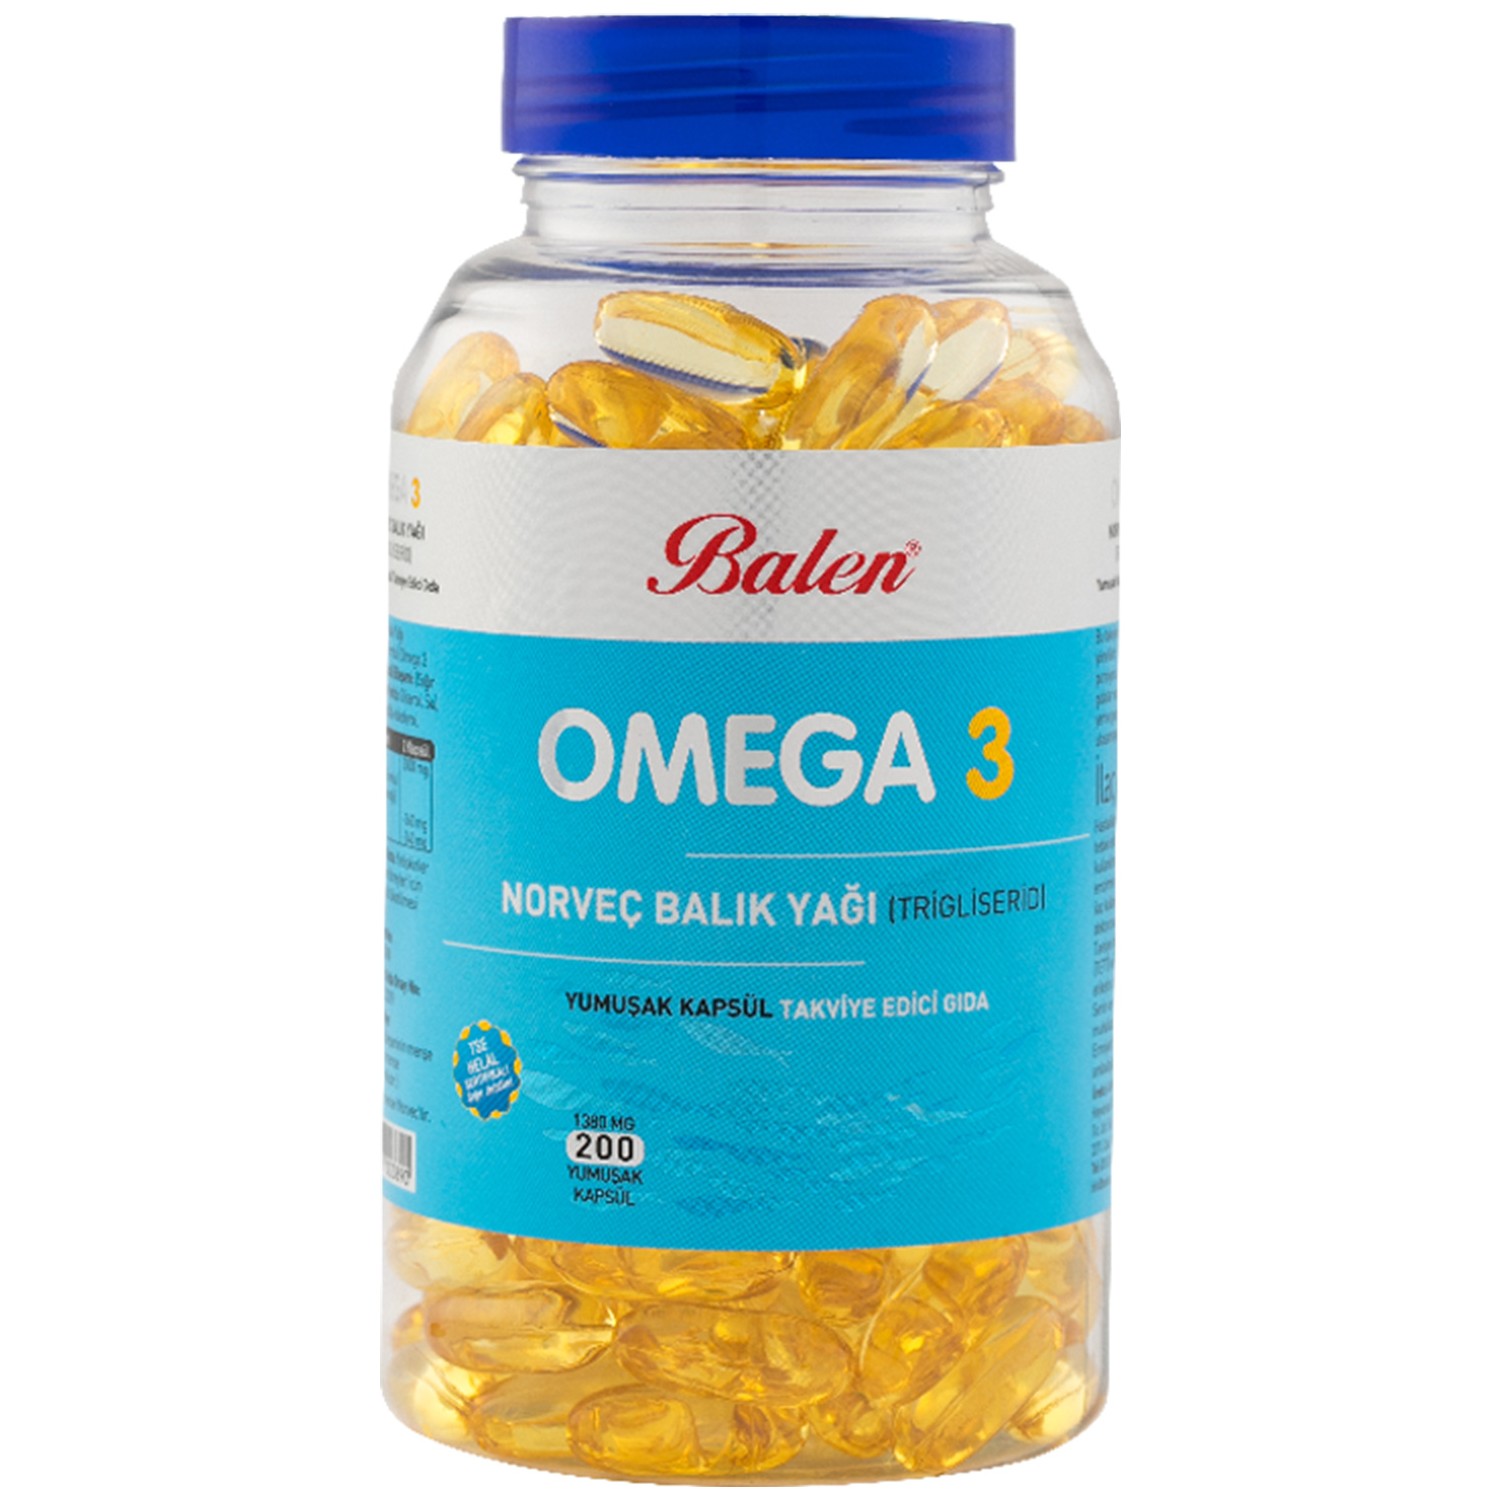 Норвежский рыбий жир Balen Omega-3 (триглицерид) 1380 мг, 200 капсул now tri 3d omega 90 капсул 1562 мг